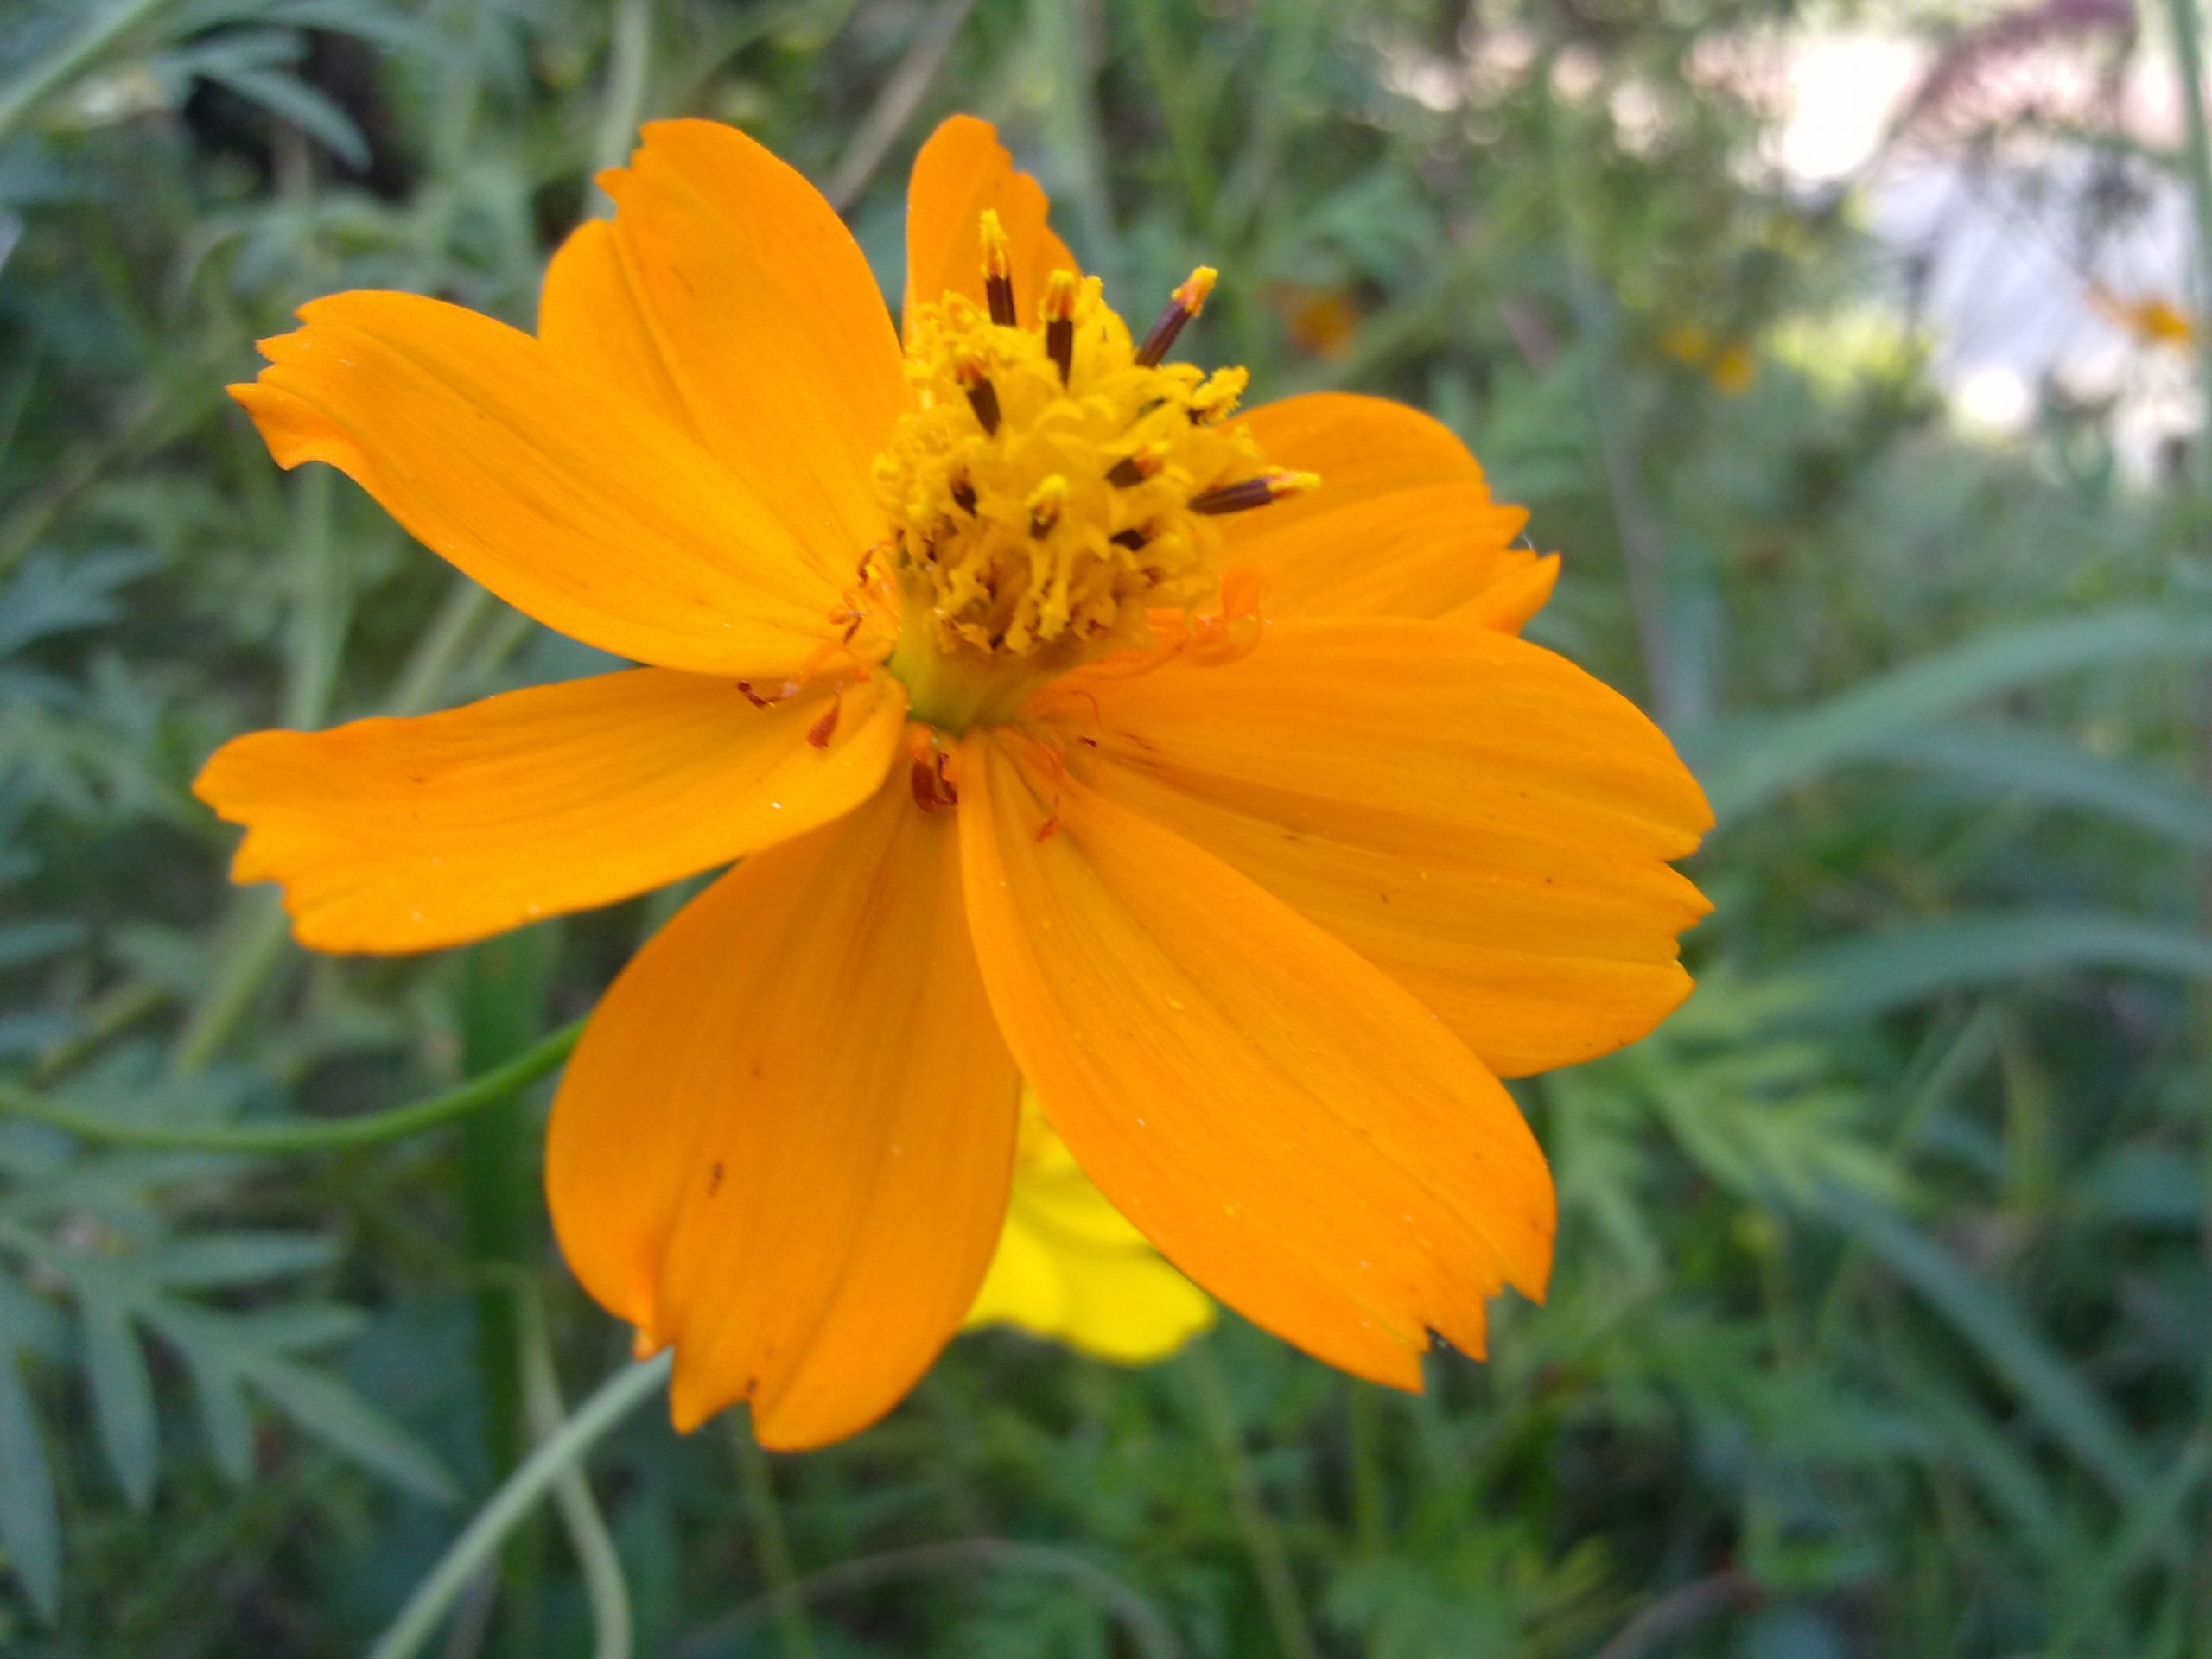 Blooming Yellow Daisy